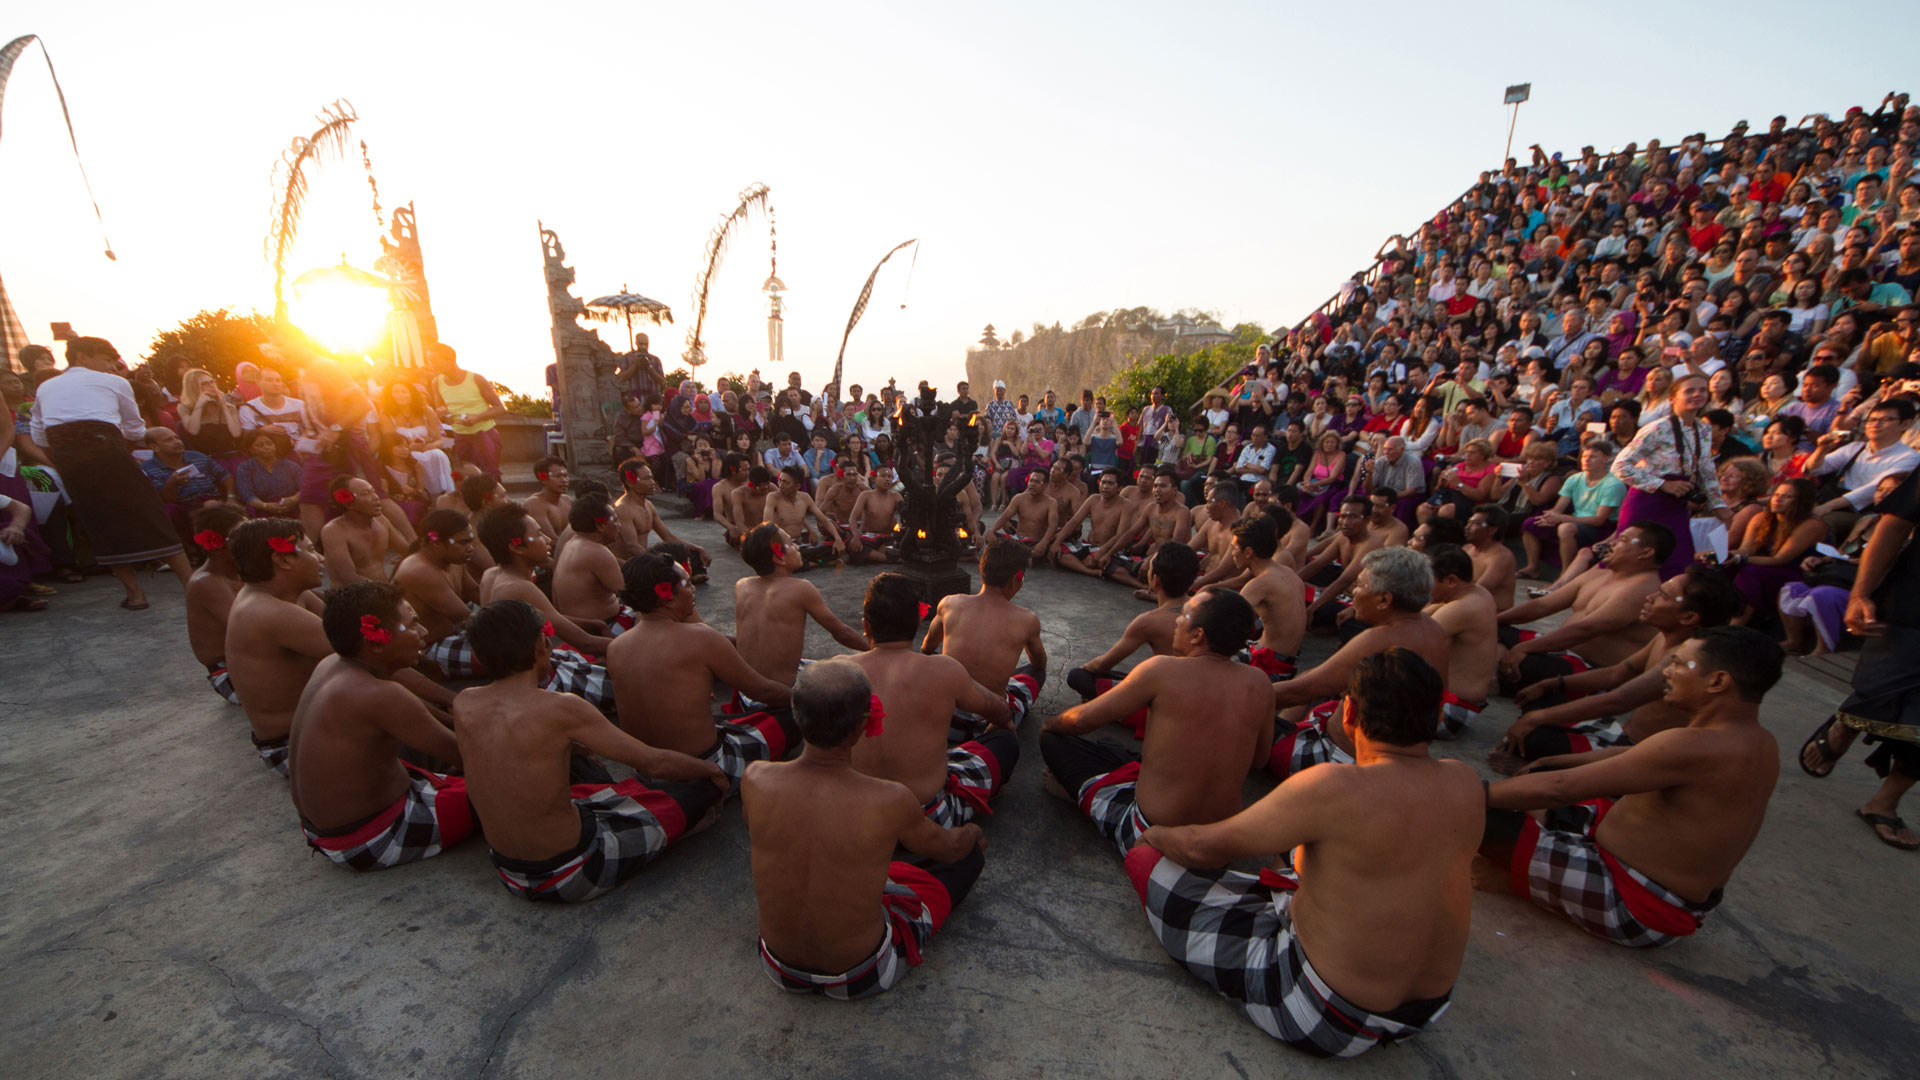 Men sitting in a circle chanting in trance during a Kecak dance performance, Ulu Watu, Bali, Indonesia